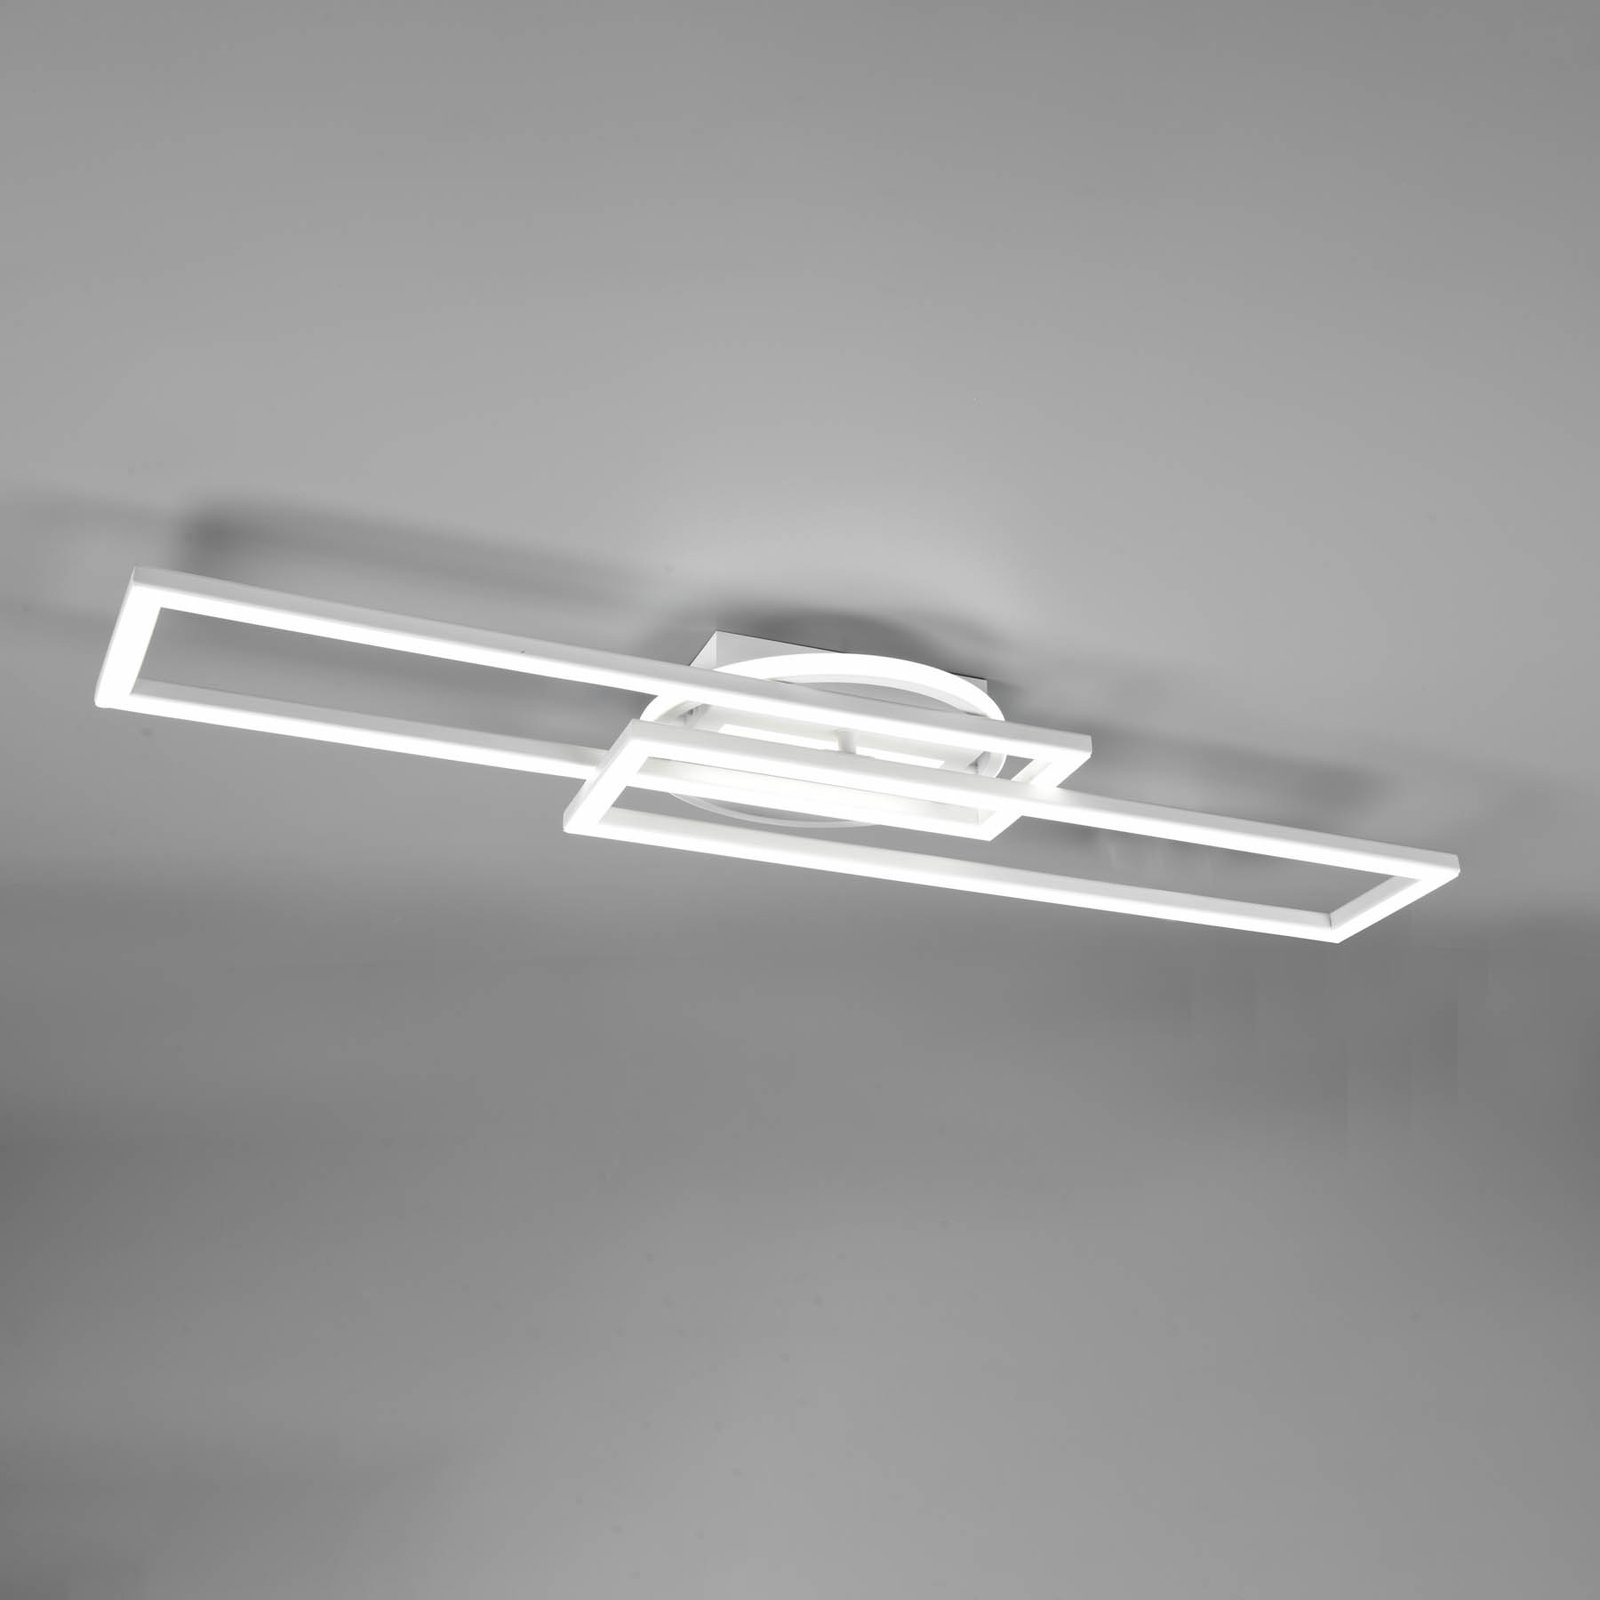 LED plafondlamp Twister draaibaar afstandbediening